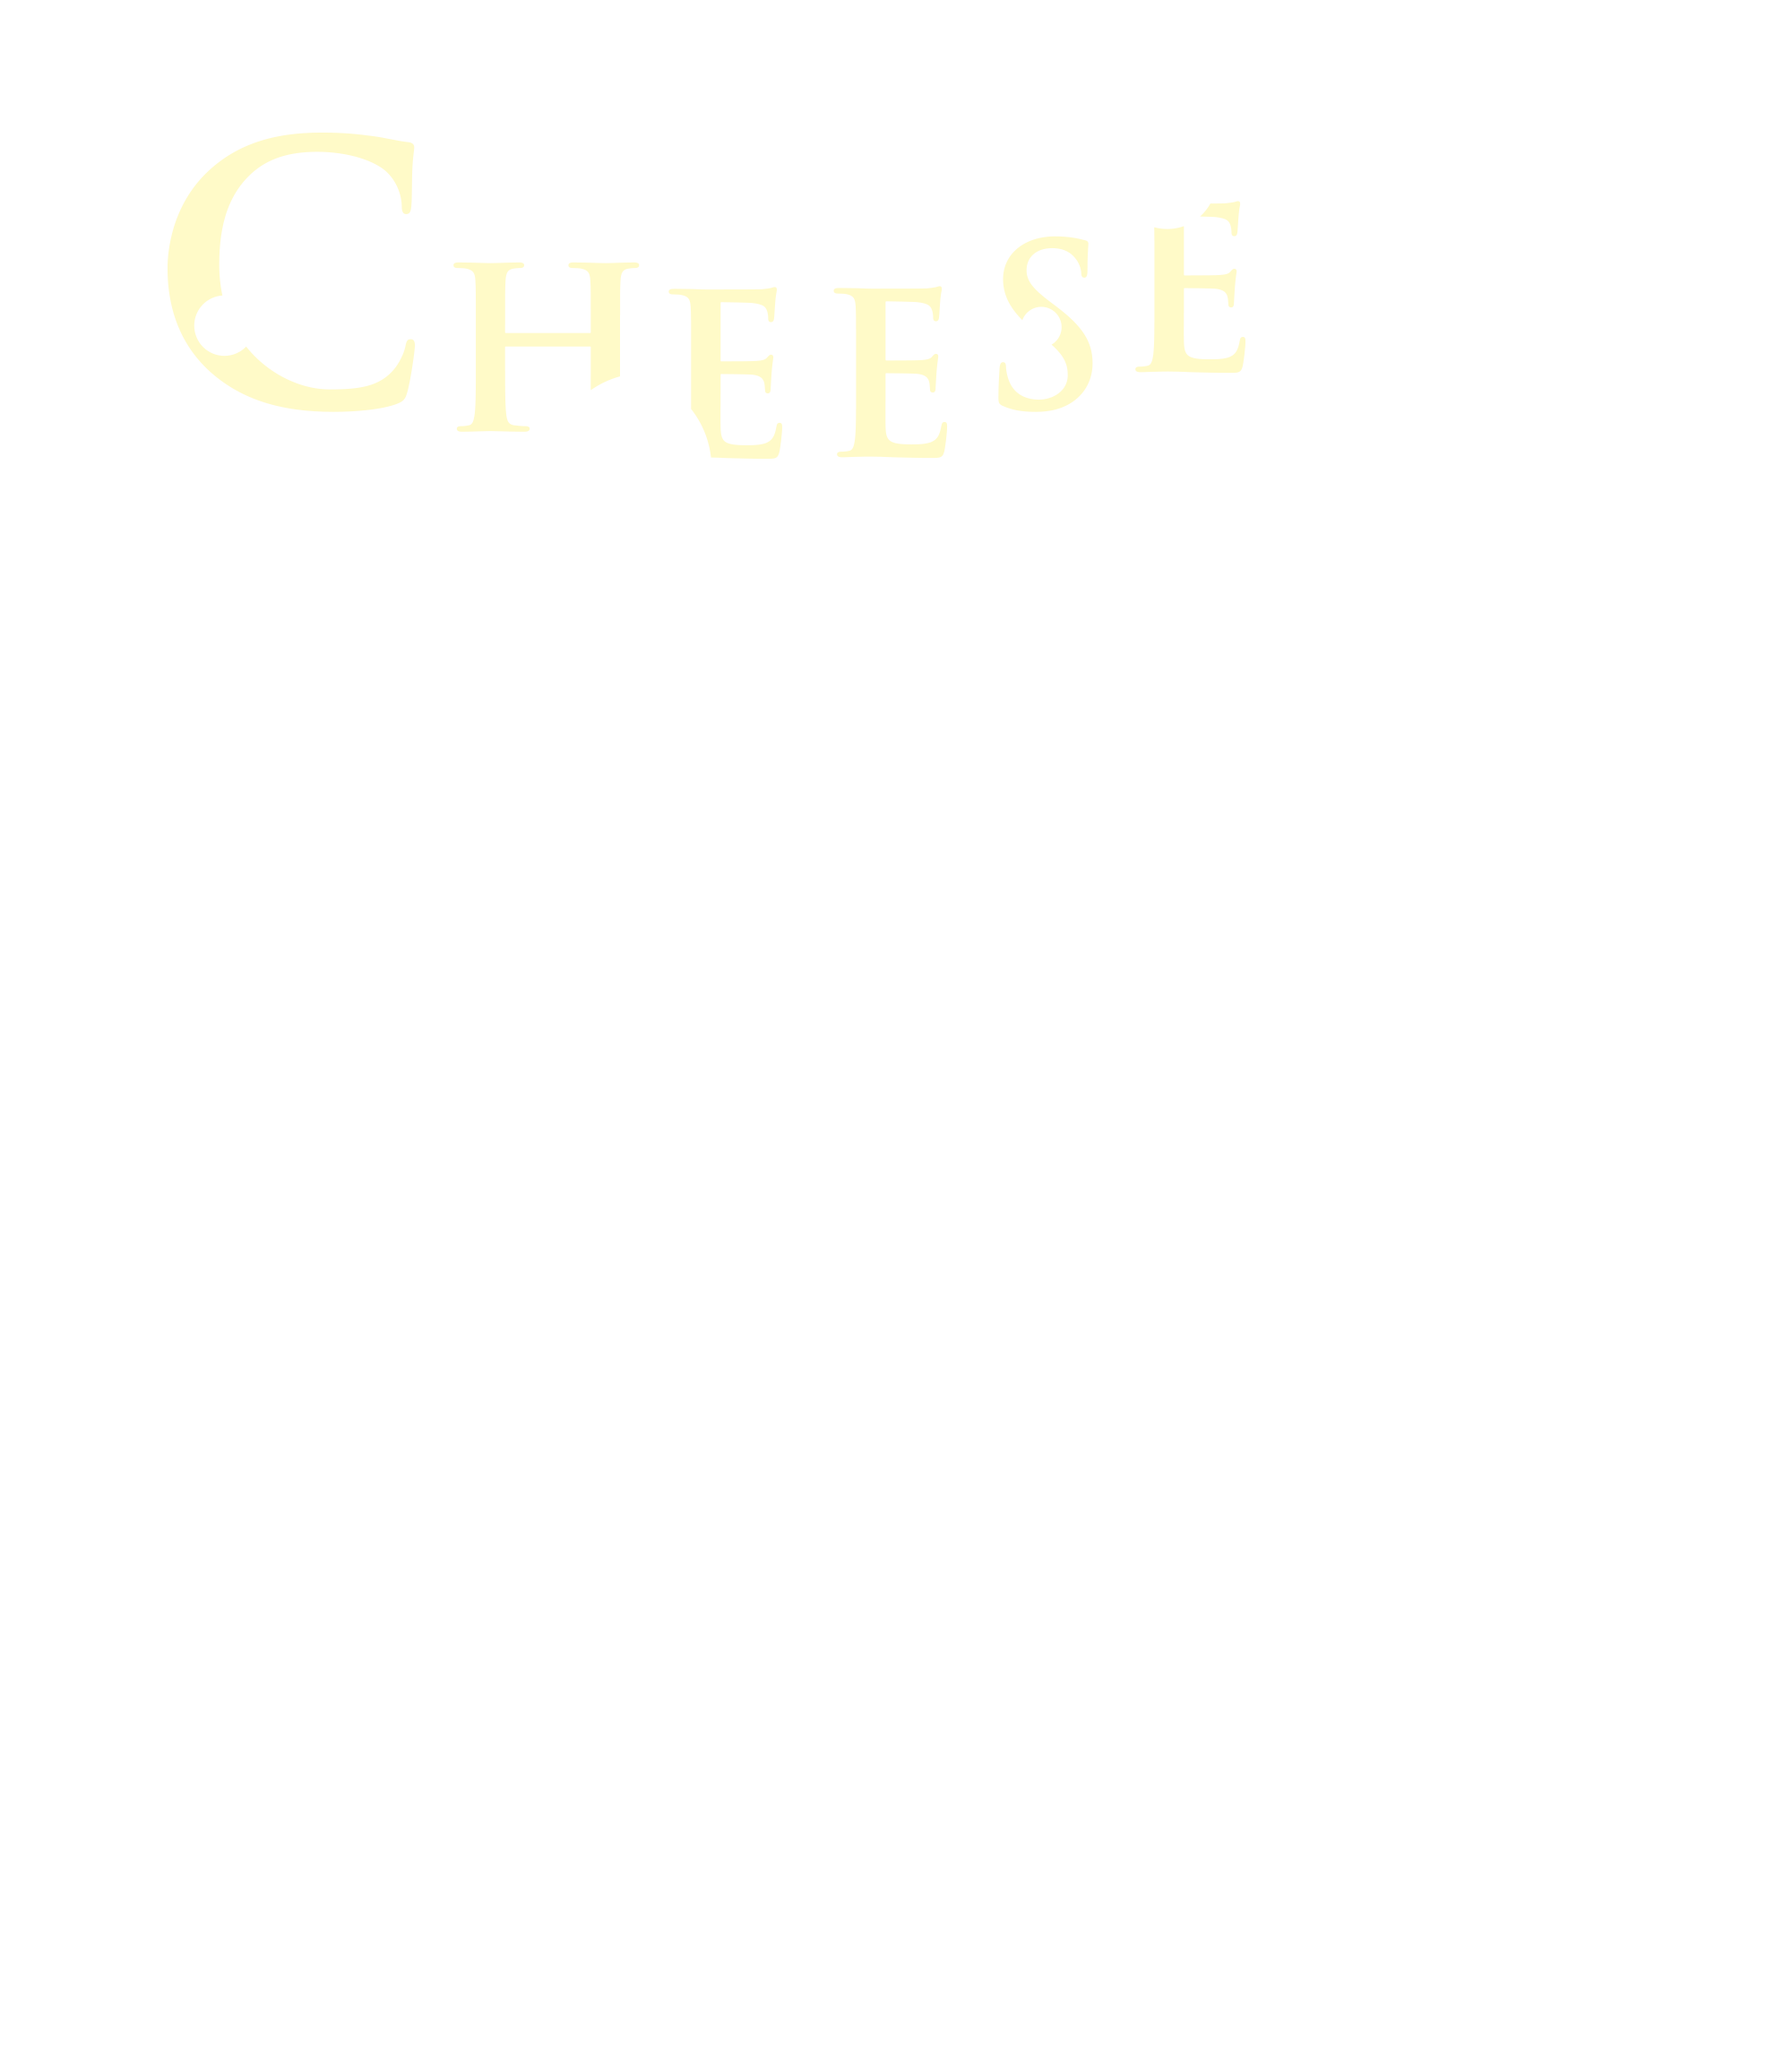 Cheese Marche